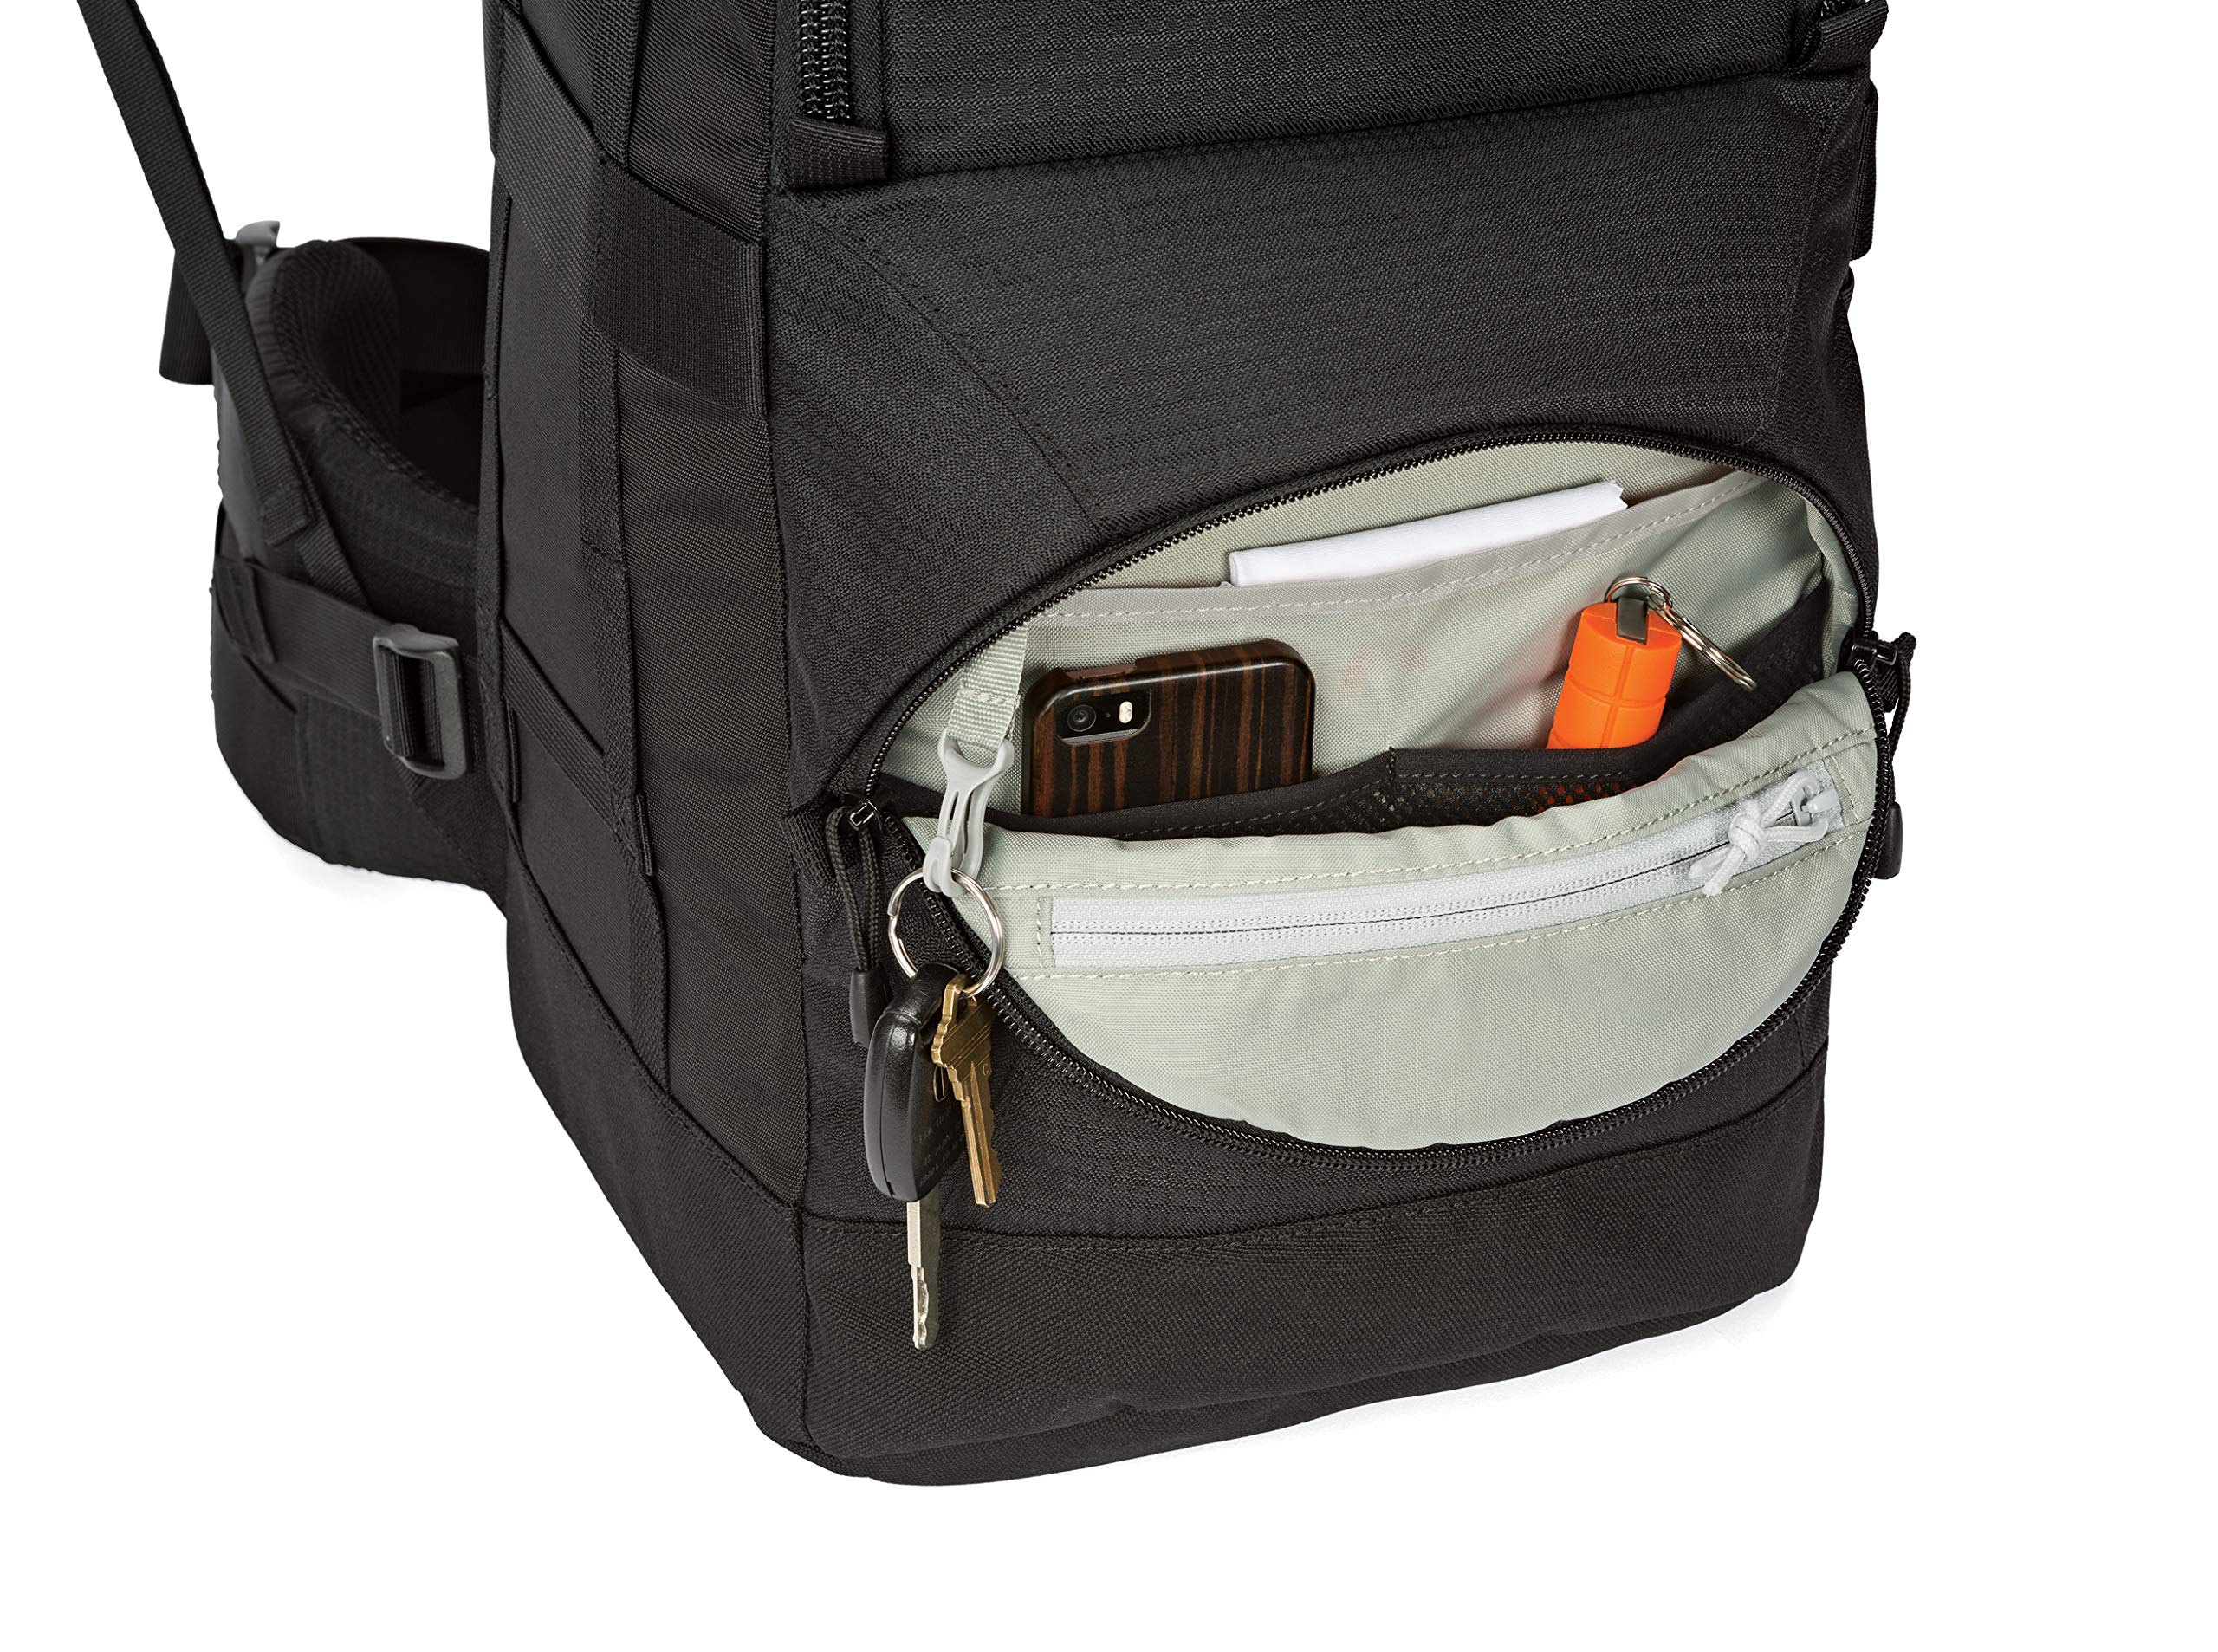 Lens Trekker 600 AW III Telephoto Lens Backpack from Lowepro ? Large Capacity Backpacking Bag for Long Lenses and Camera